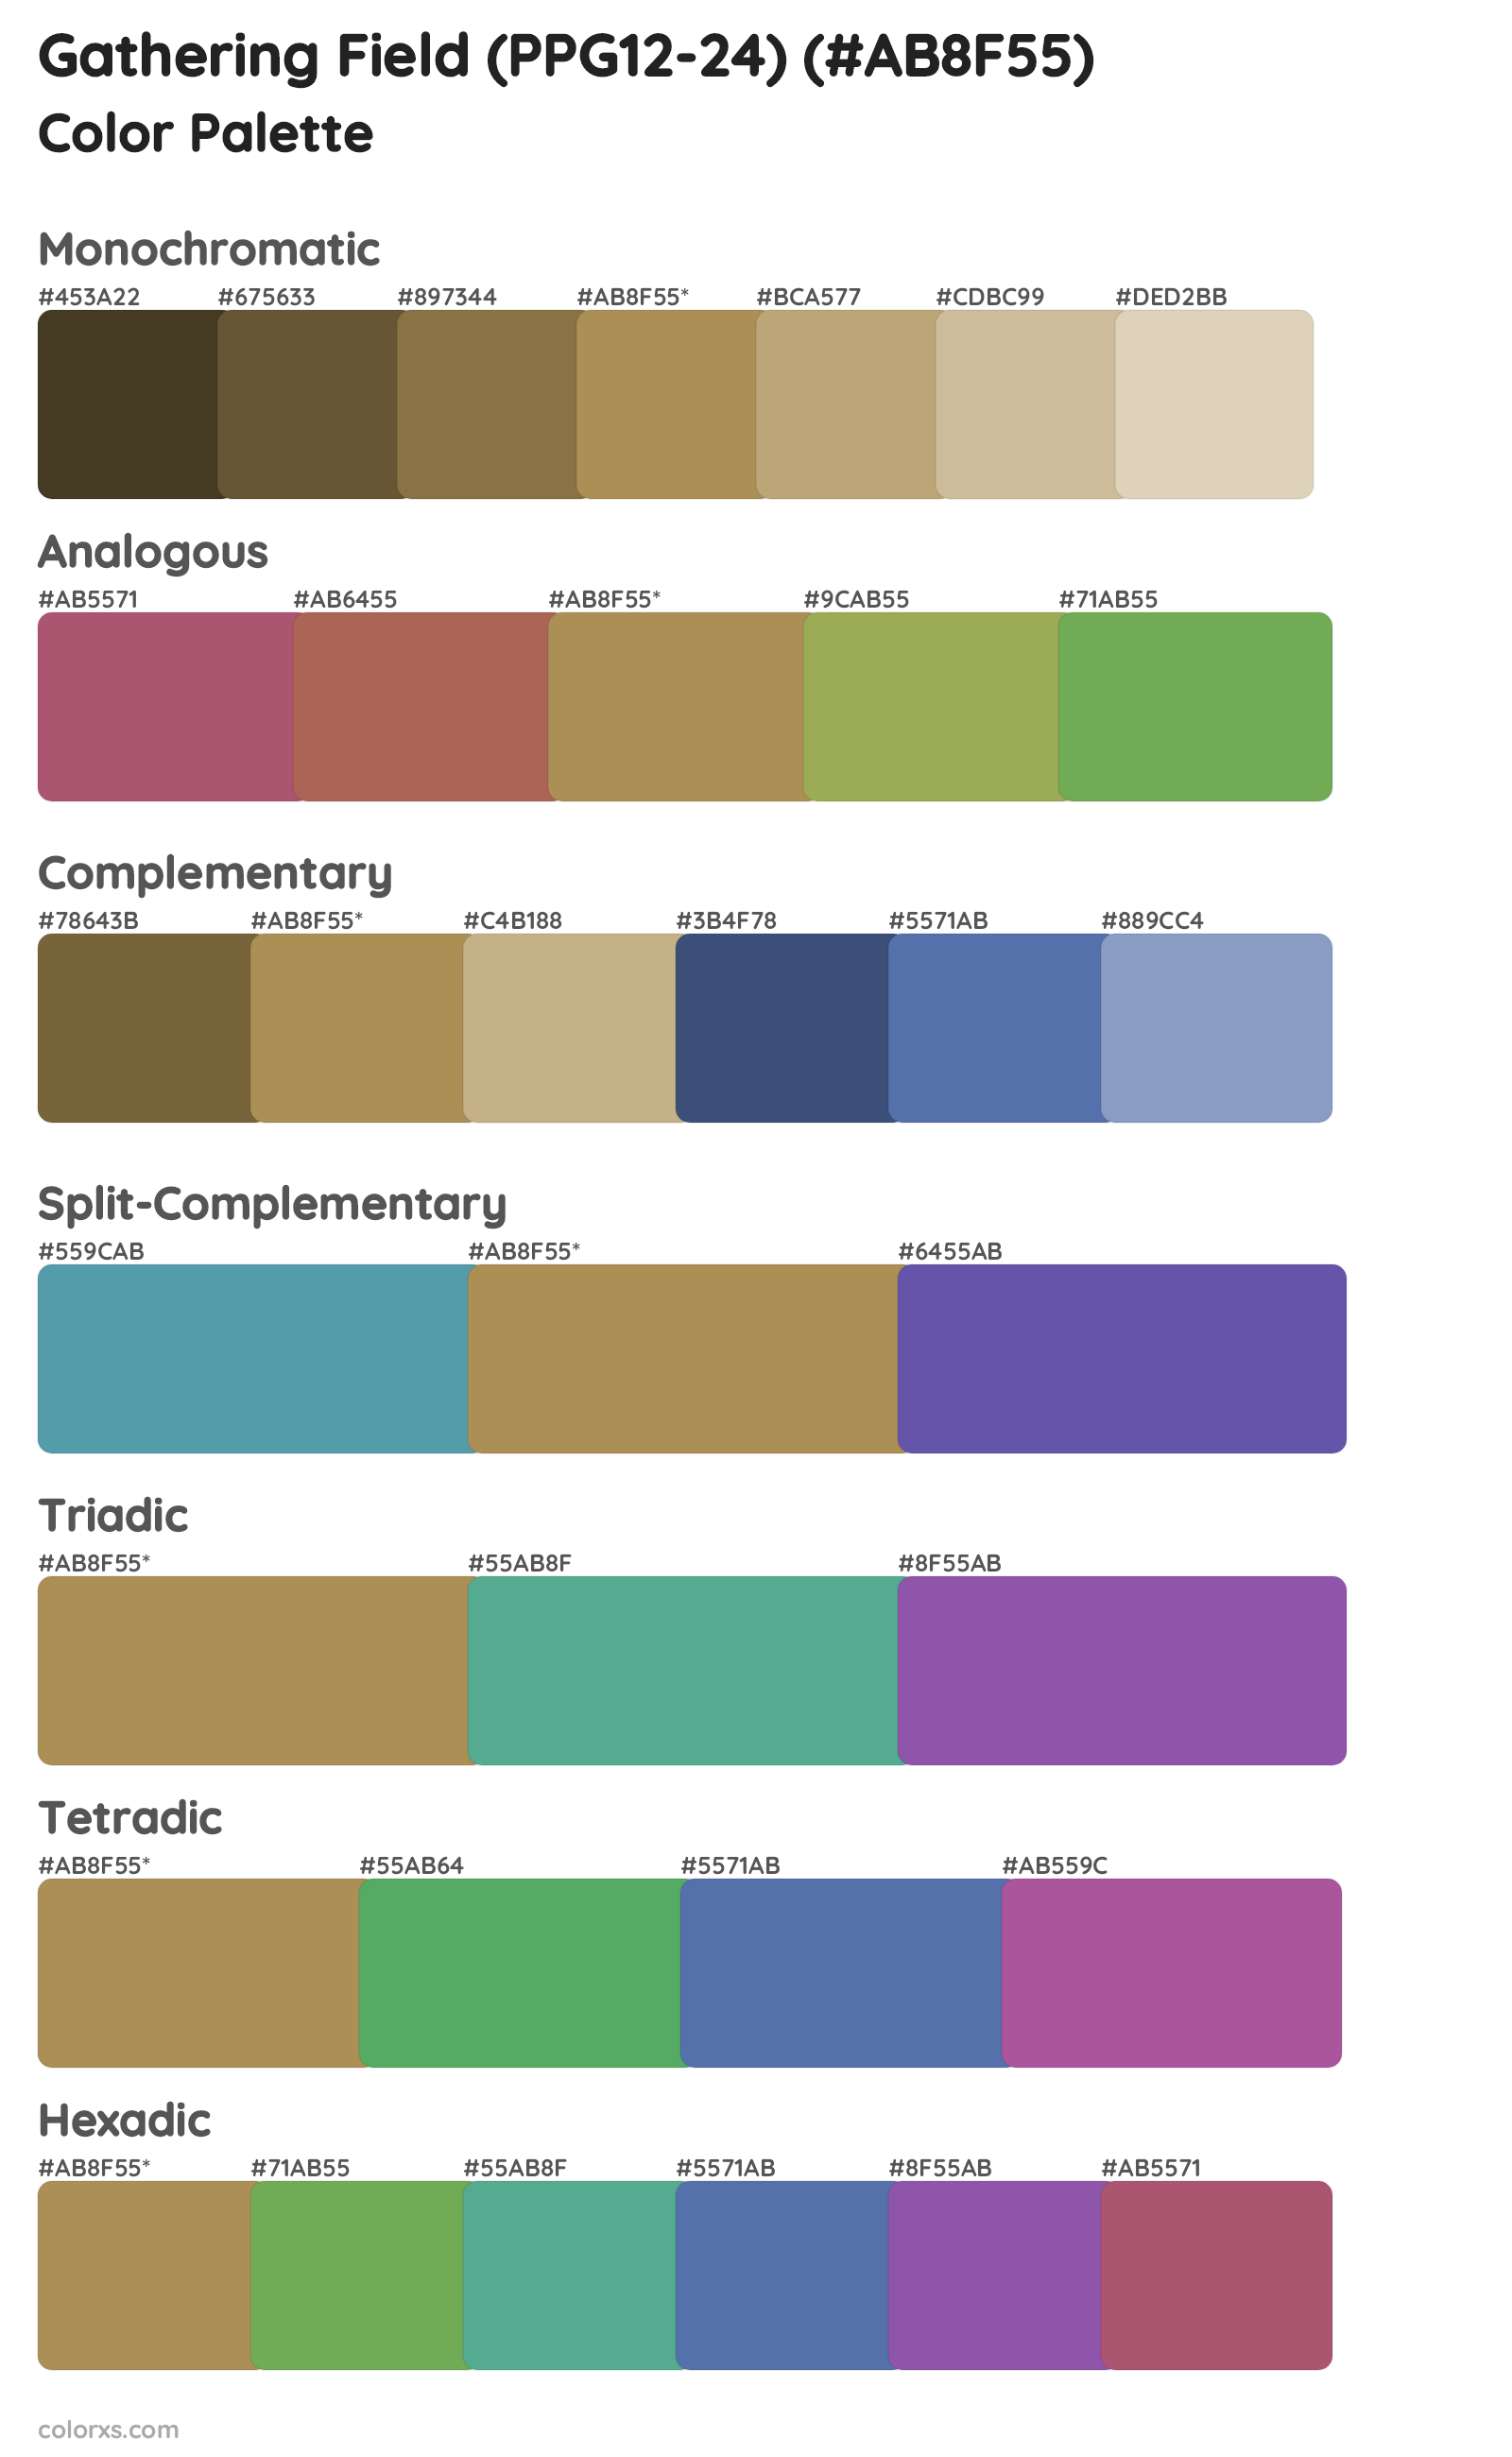 Gathering Field (PPG12-24) Color Scheme Palettes